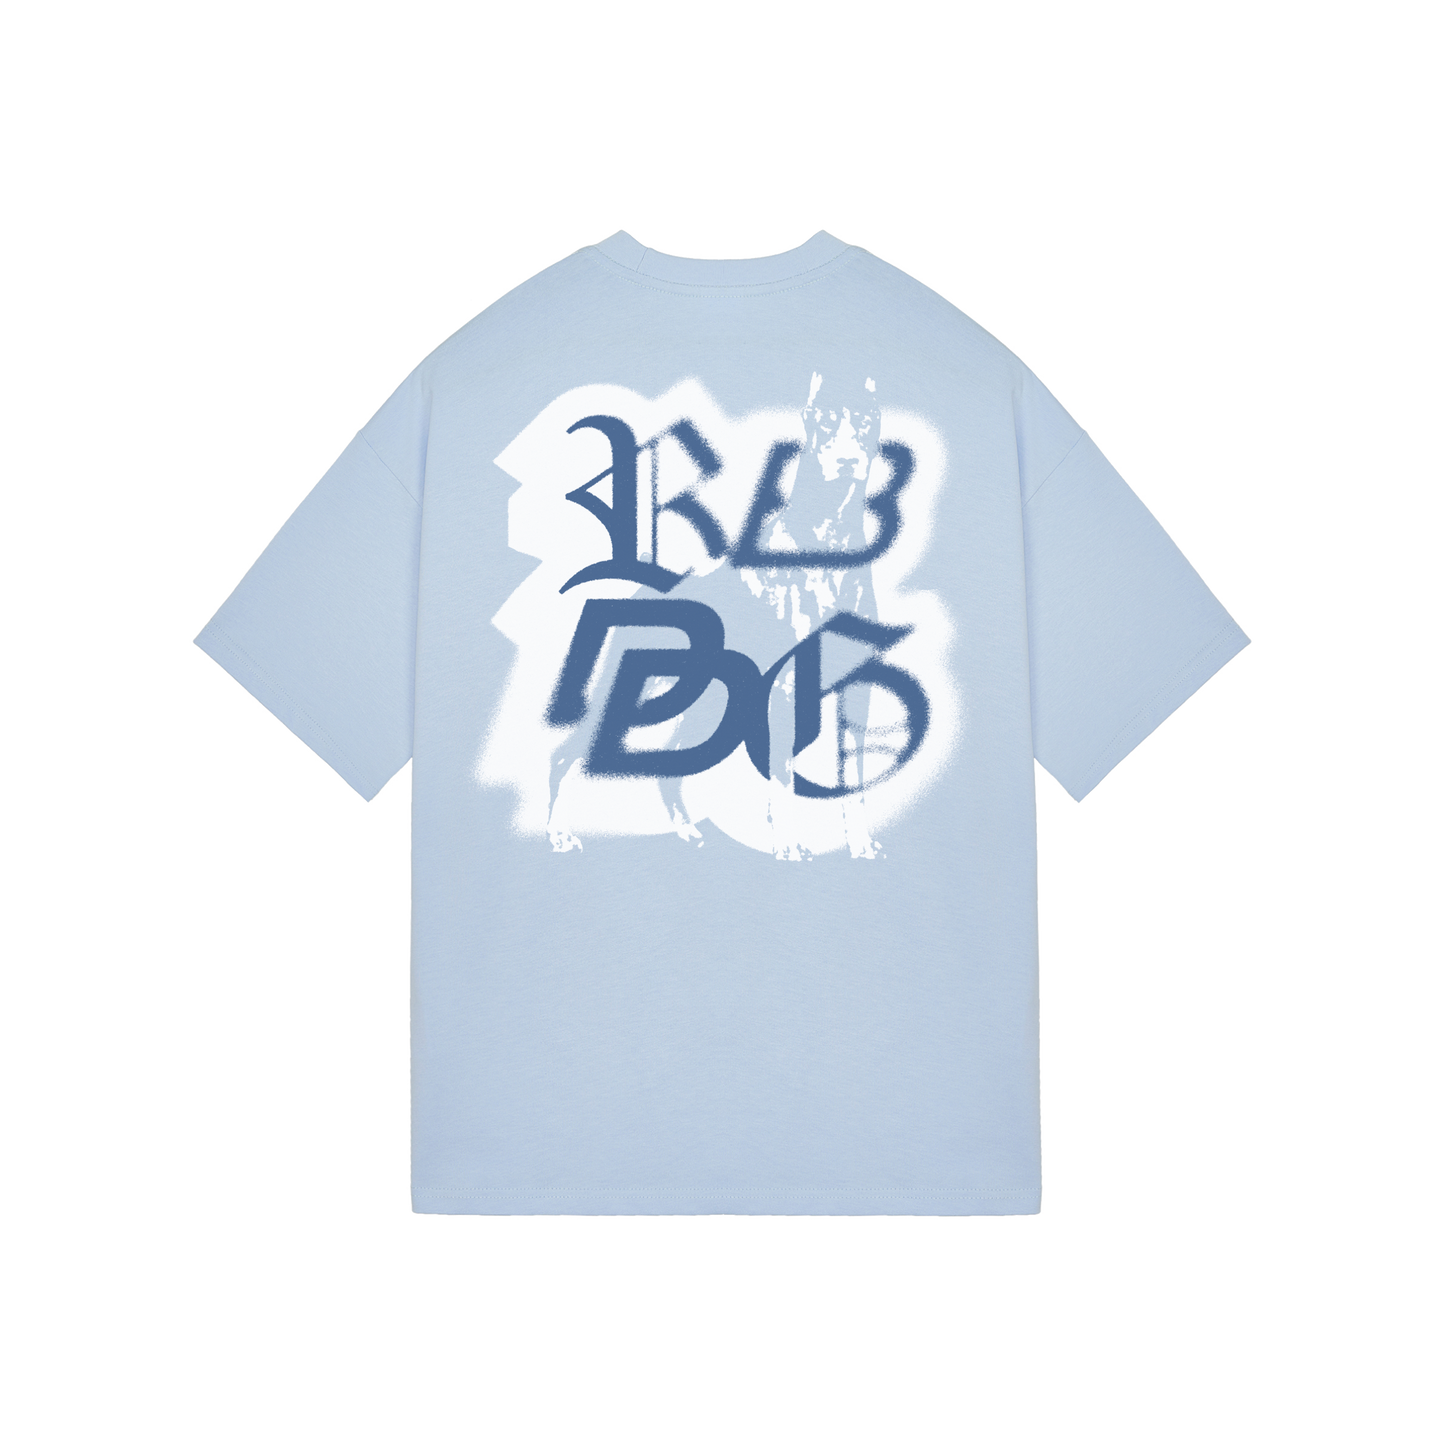 RBDDG Baby blue